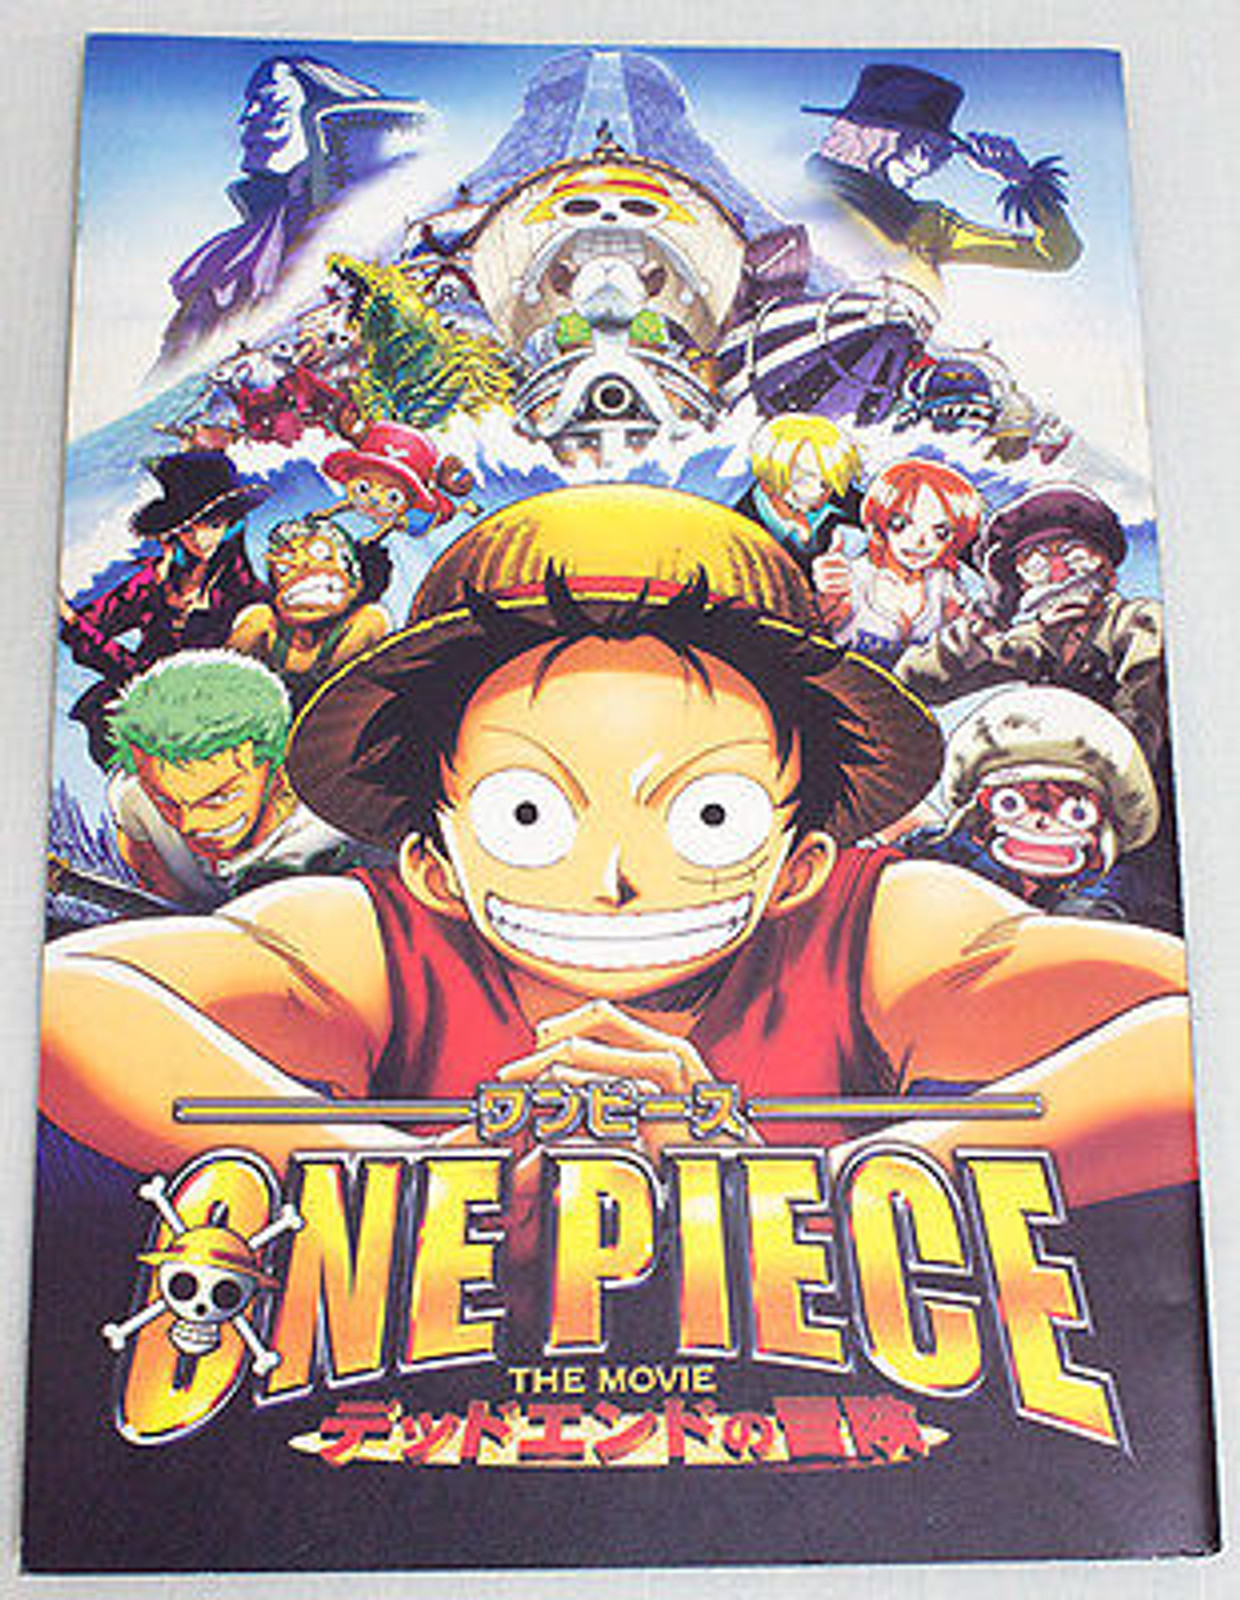 2003 One Piece: Dead End Adventure